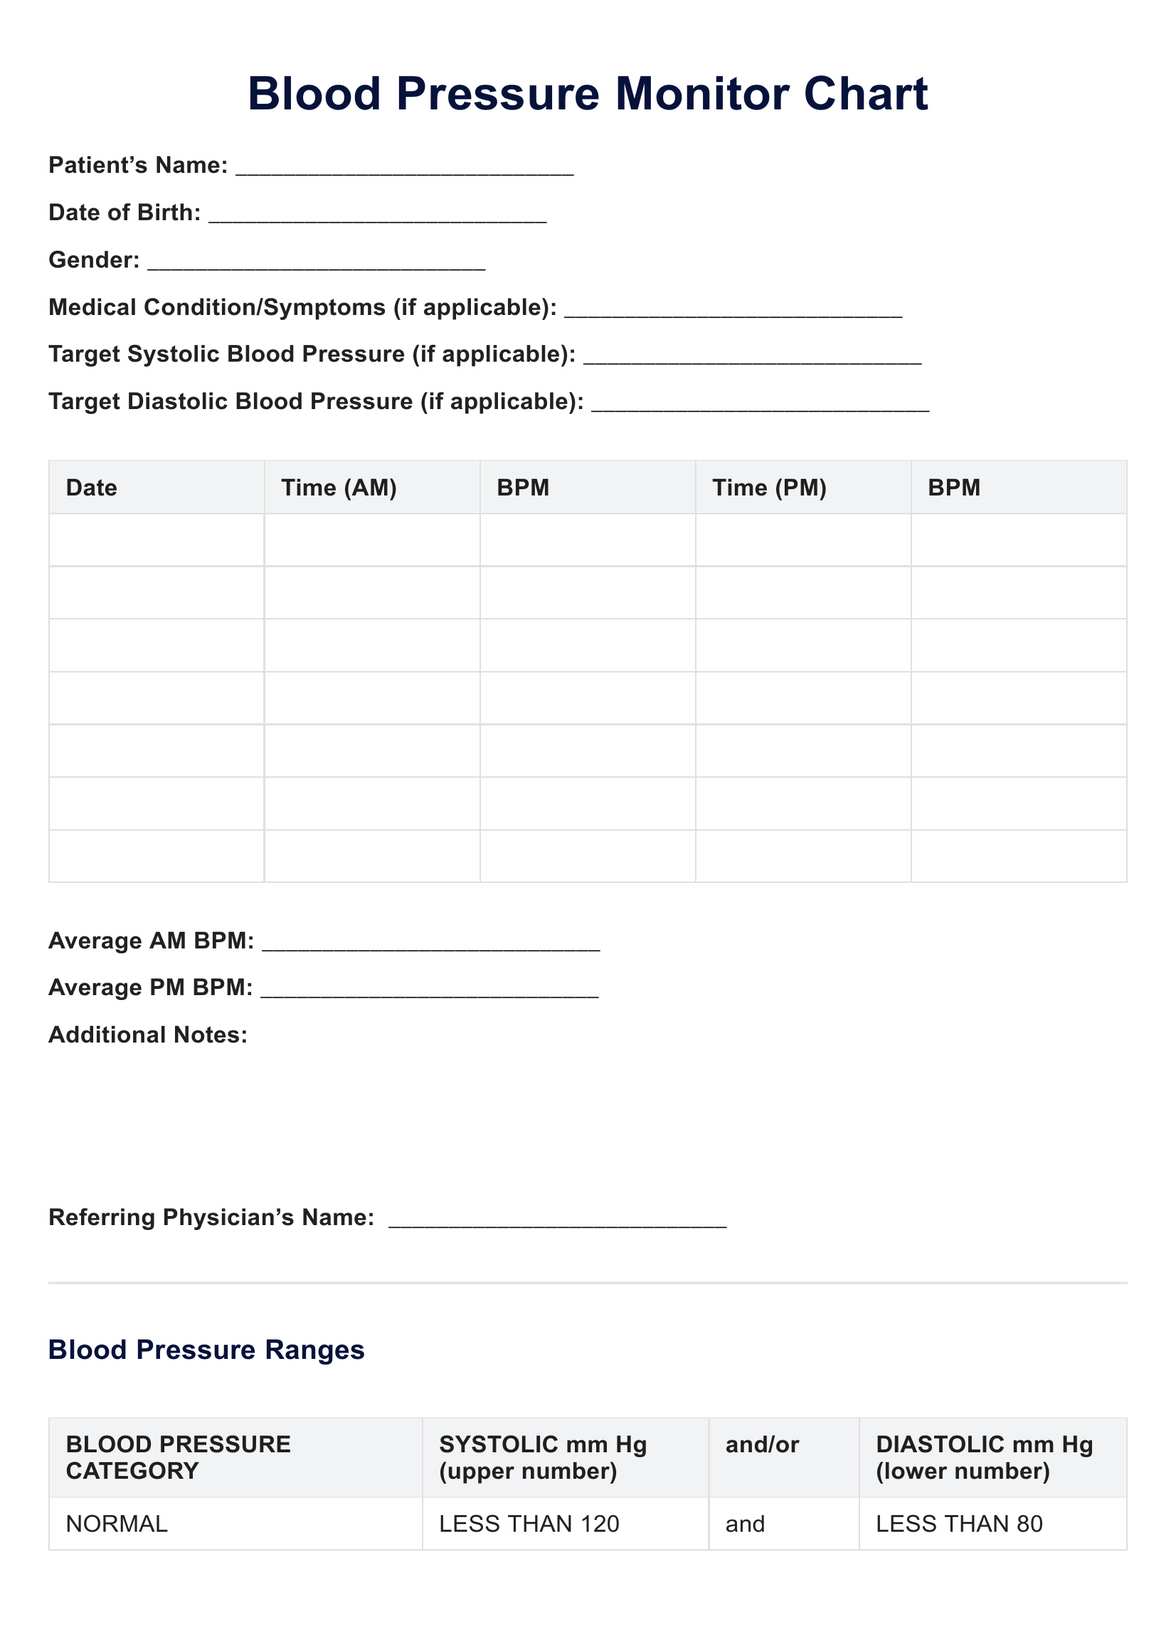 Blood Pressure Monitor PDF Example